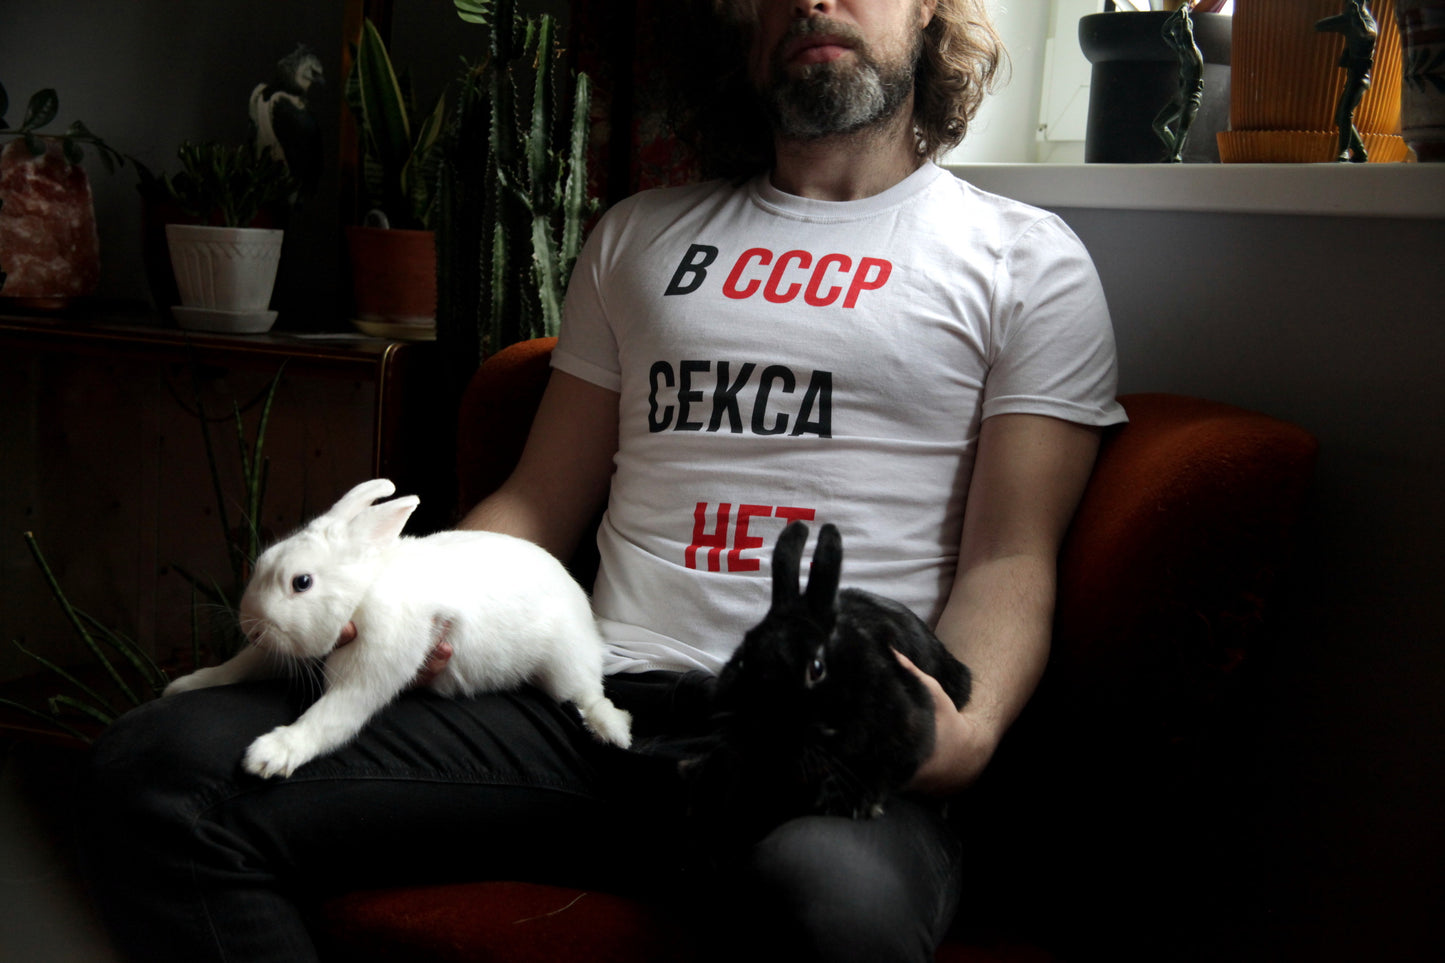 No Sex In USSR Unisex T-Shirt (Light)